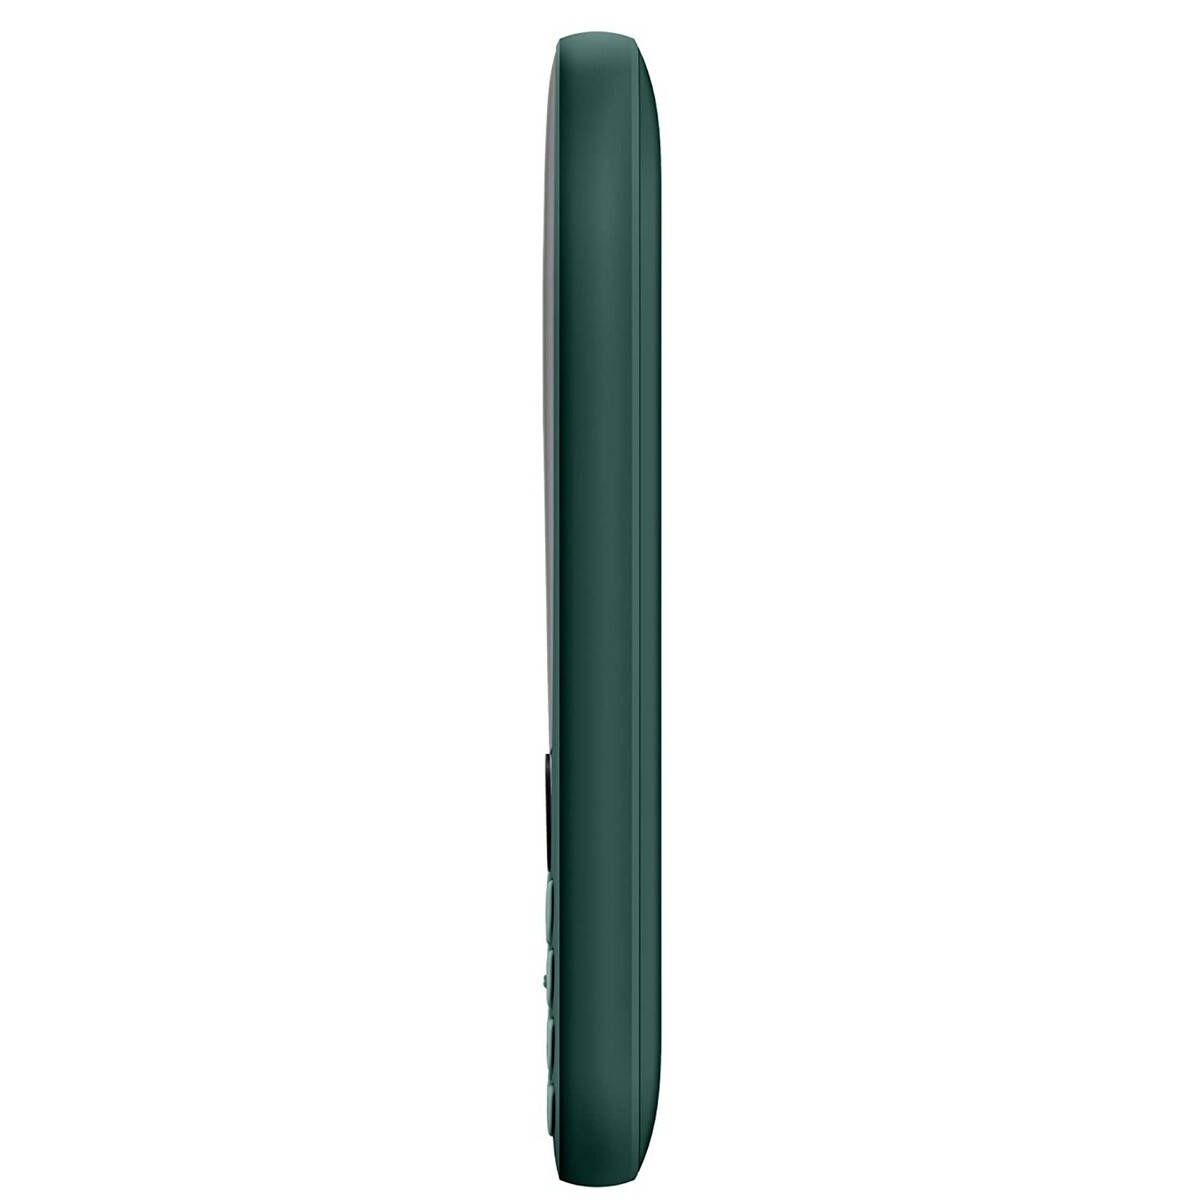 Nokia Mobile Phone 6310 Dual Sim Green